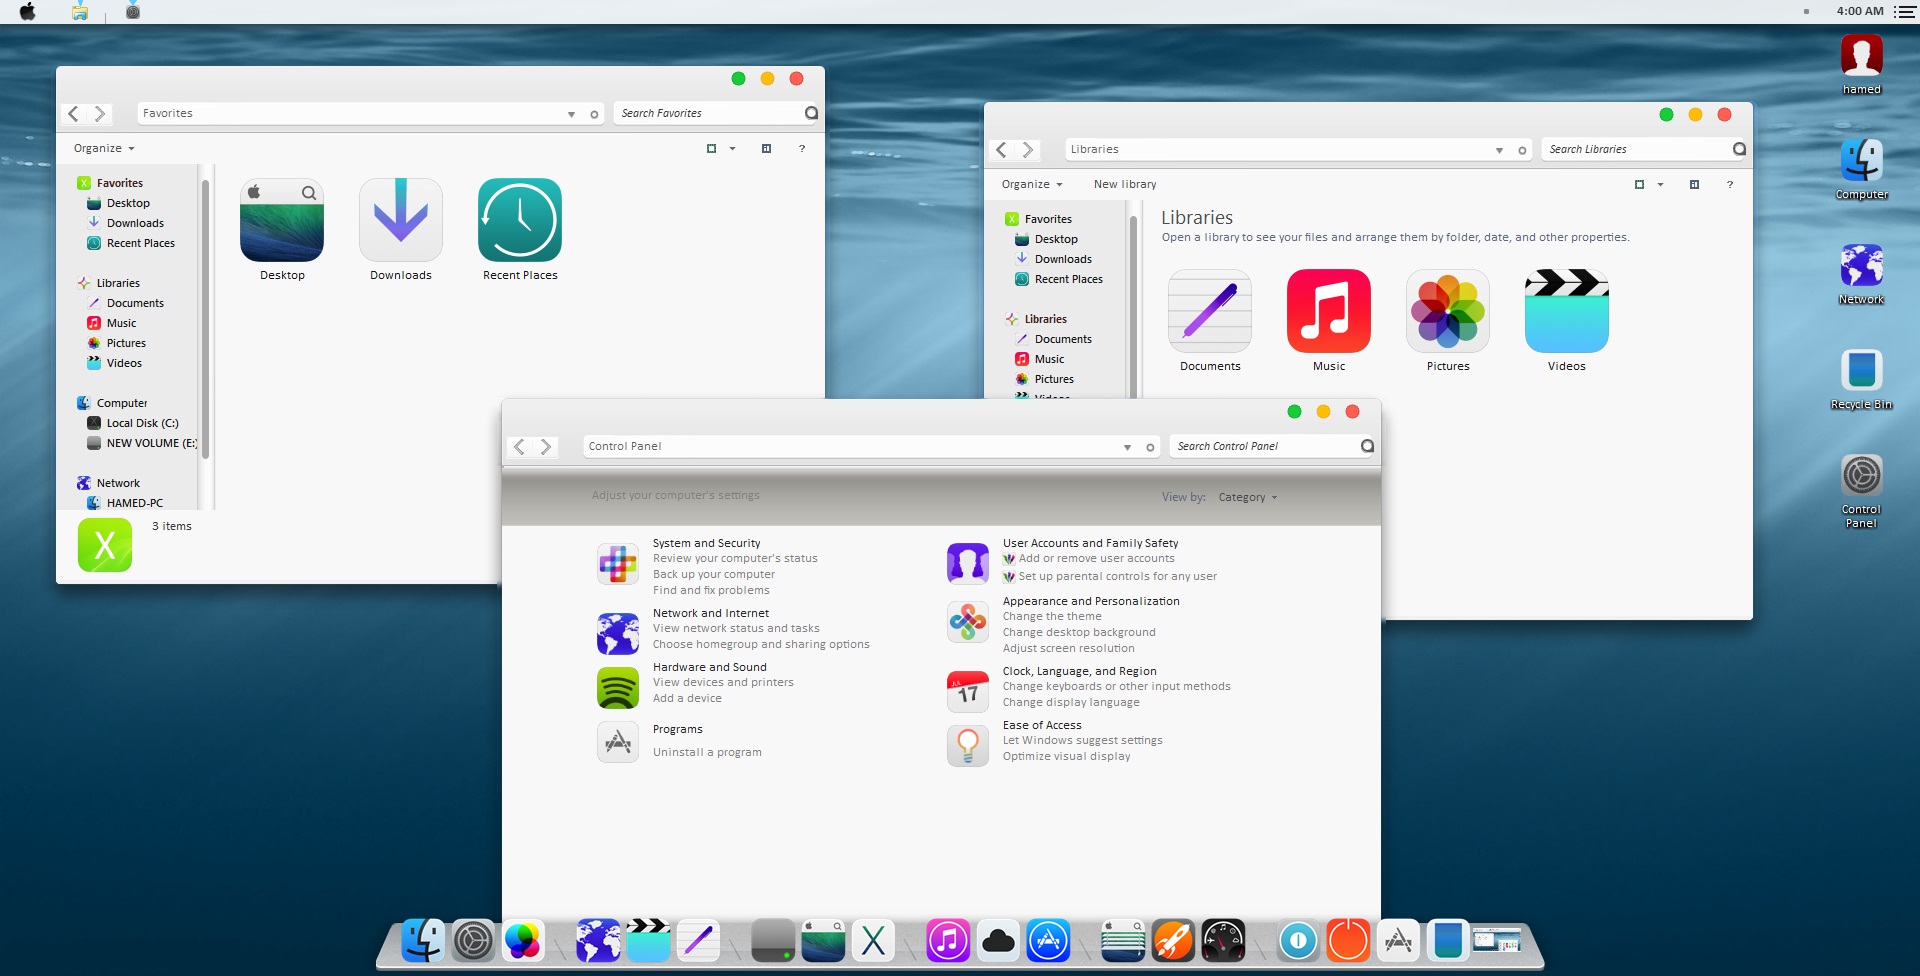 Mac OS X Yosemite SkinPack for Win7/8/8.1 released